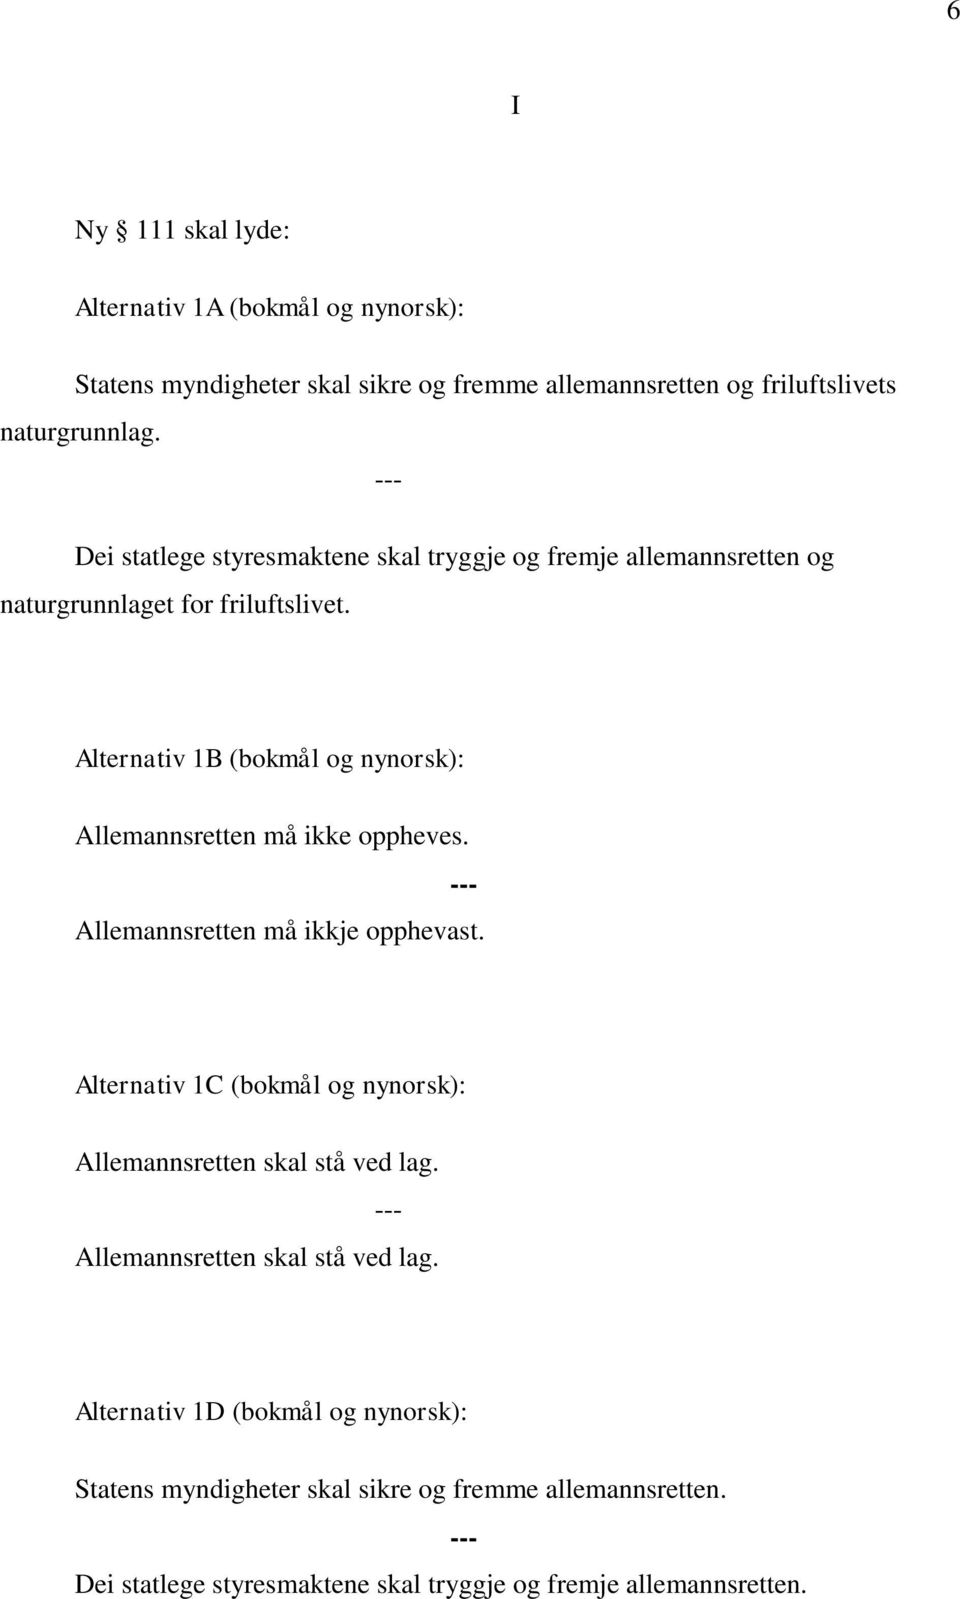 Alternativ 1B (bokmål og nynorsk): Allemannsretten må ikke oppheves. Allemannsretten må ikkje opphevast.